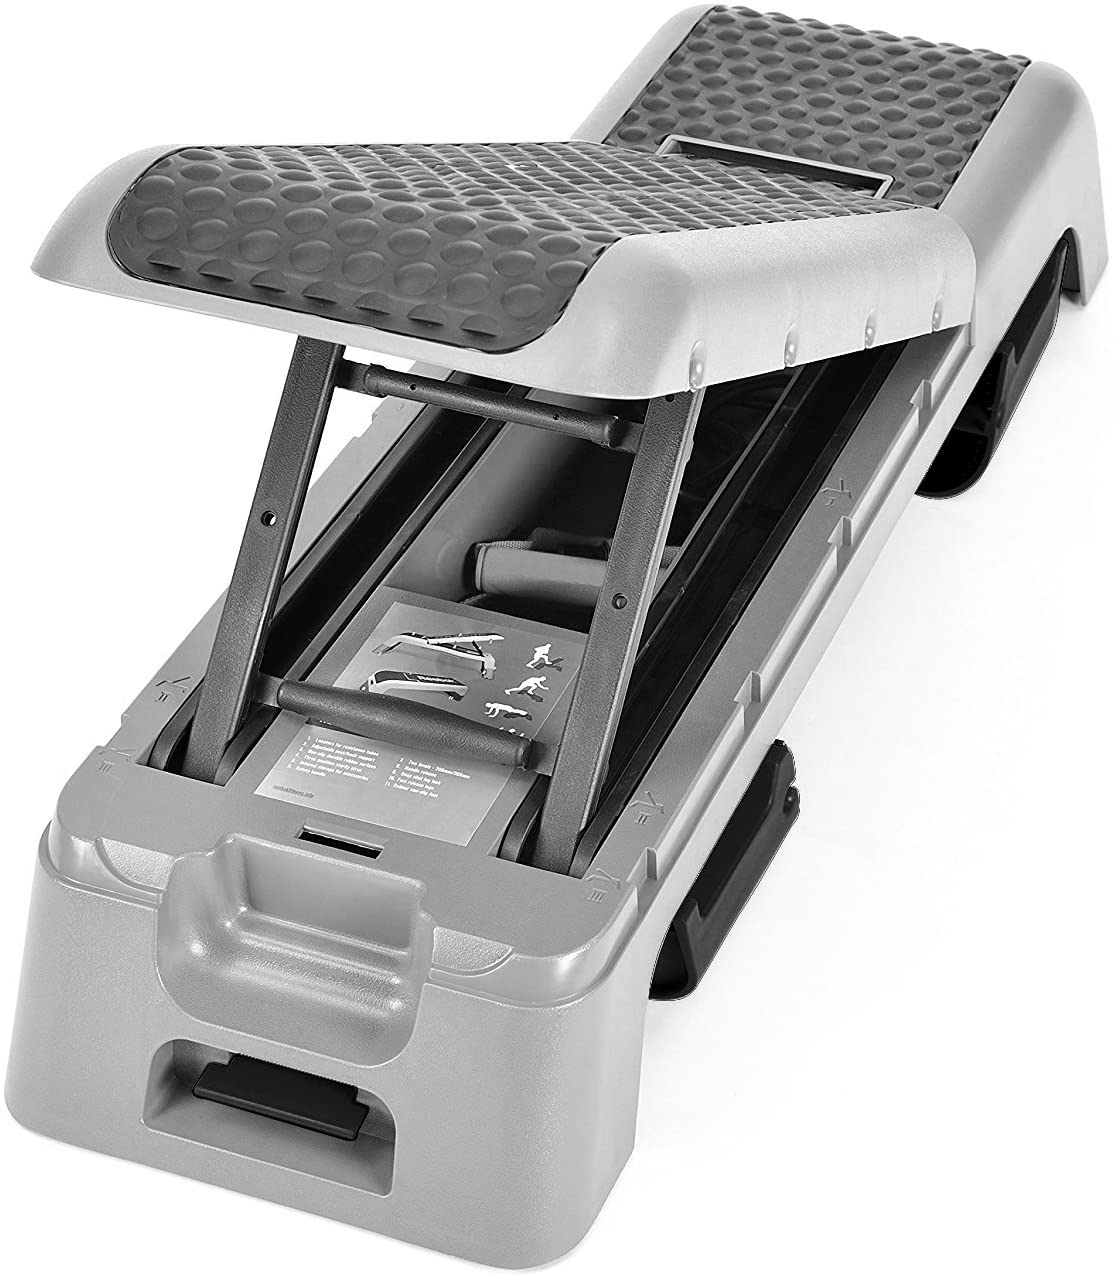 Vector X Adjustable Bench Workout Deck (Black/Grey) - Best Price online Prokicksports.com